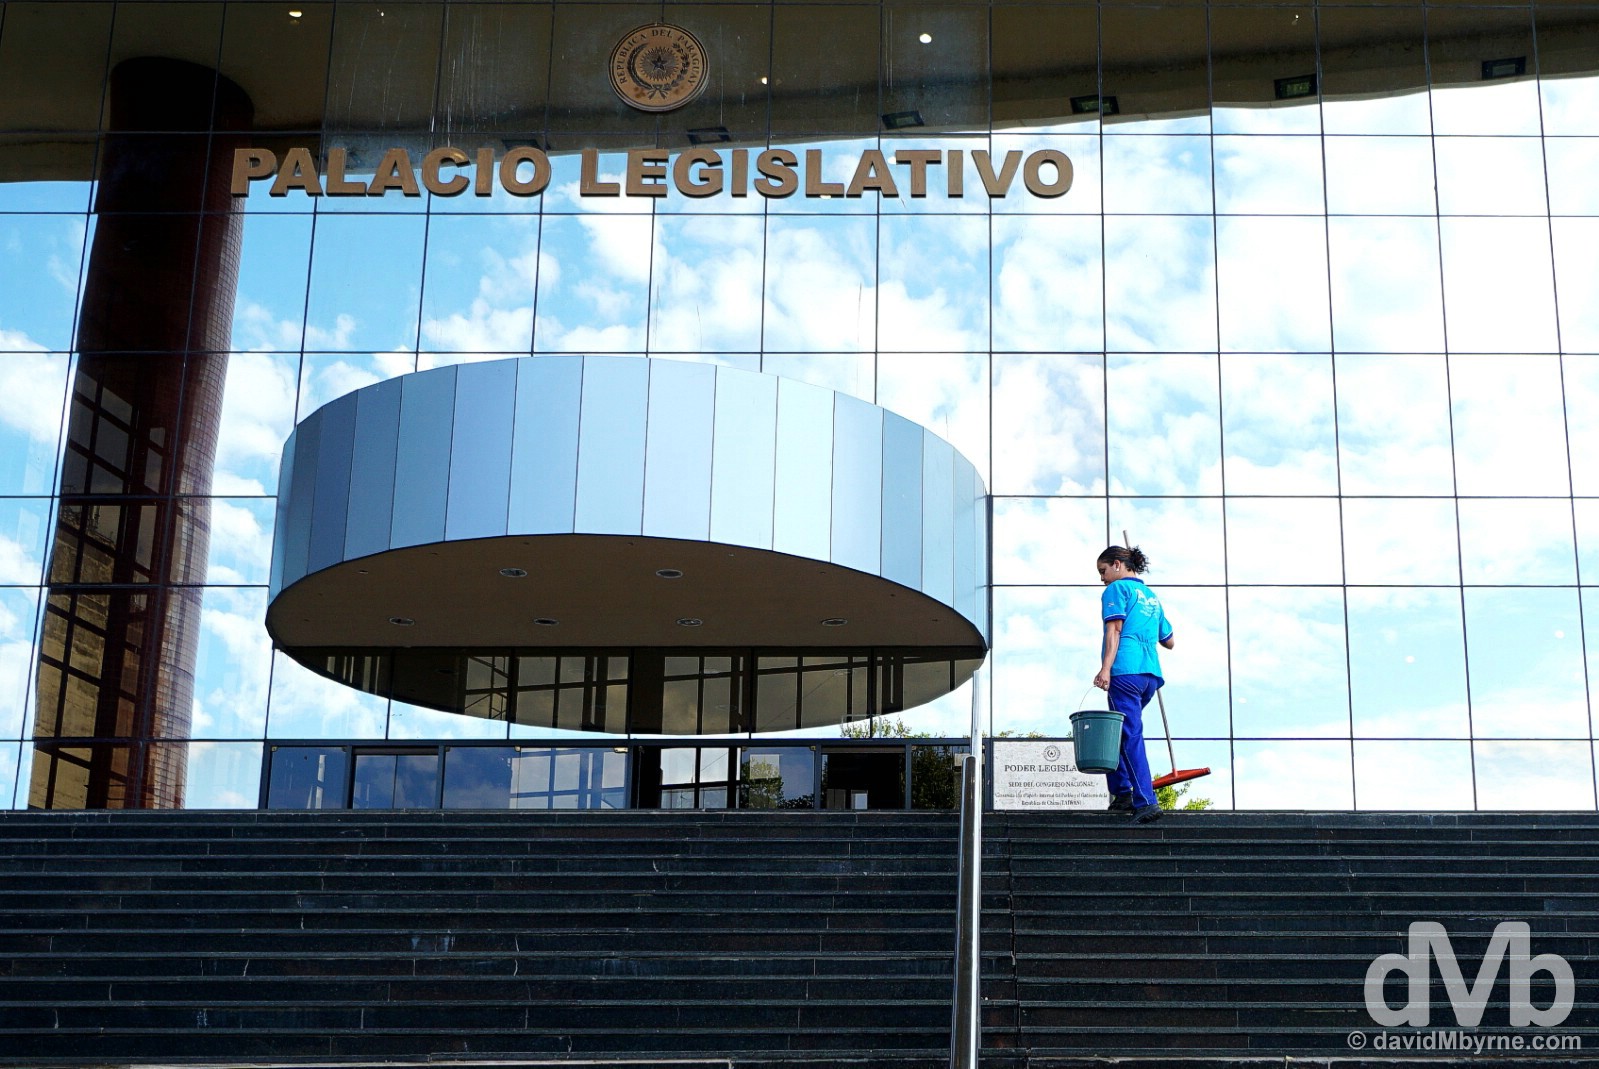 Cleaning the steps of the Palacio Legislativo in Asuncion, Paraguay. September 9, 2015. 